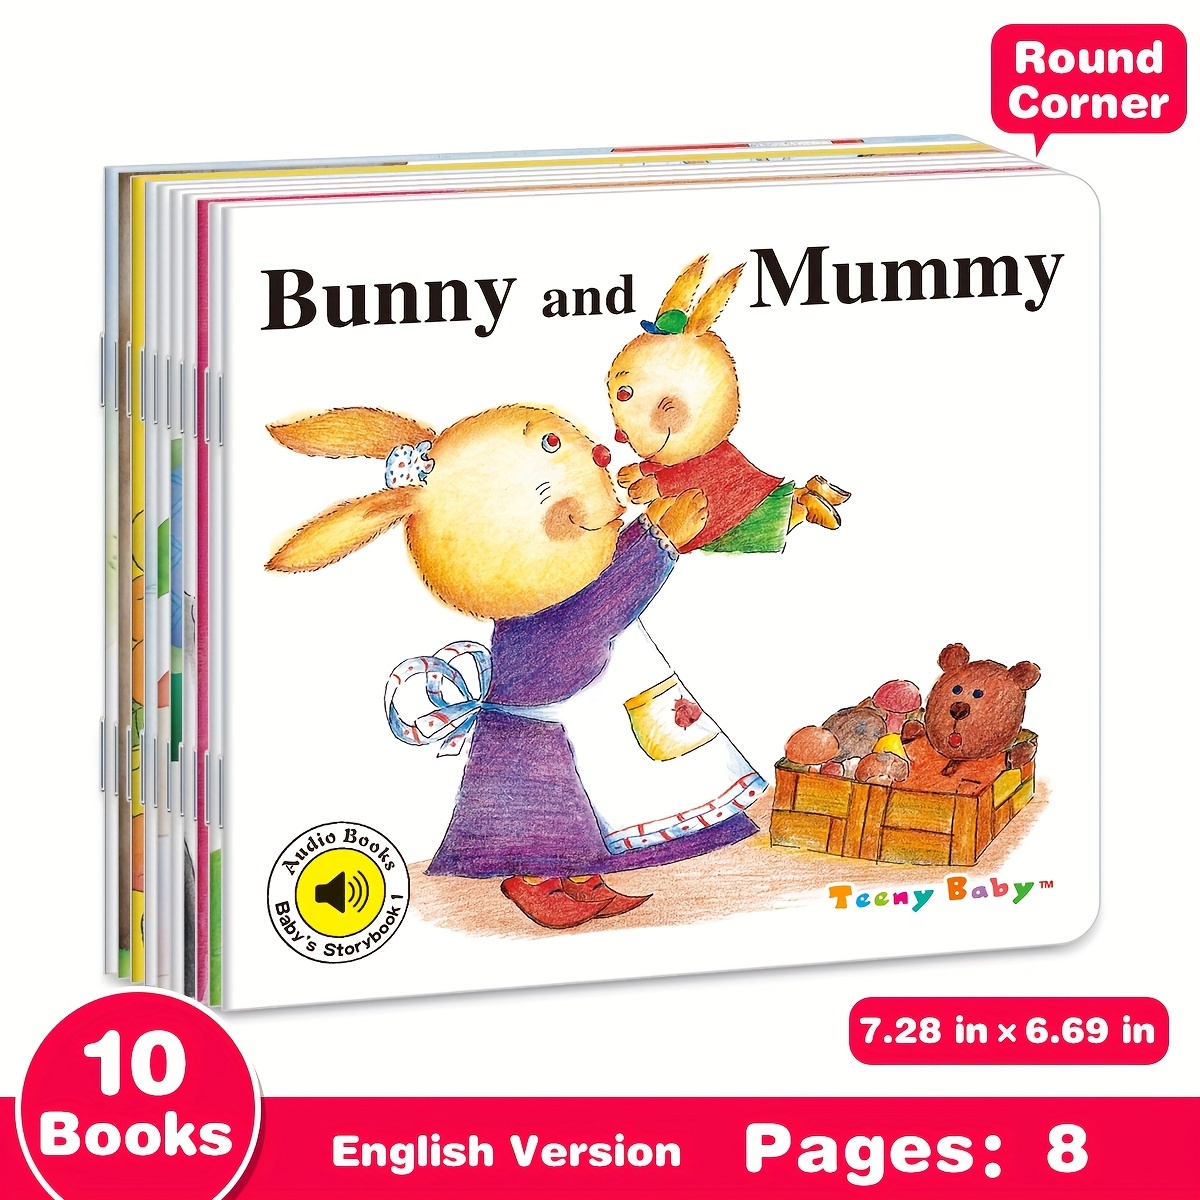 Libros para niños de 0-12 meses